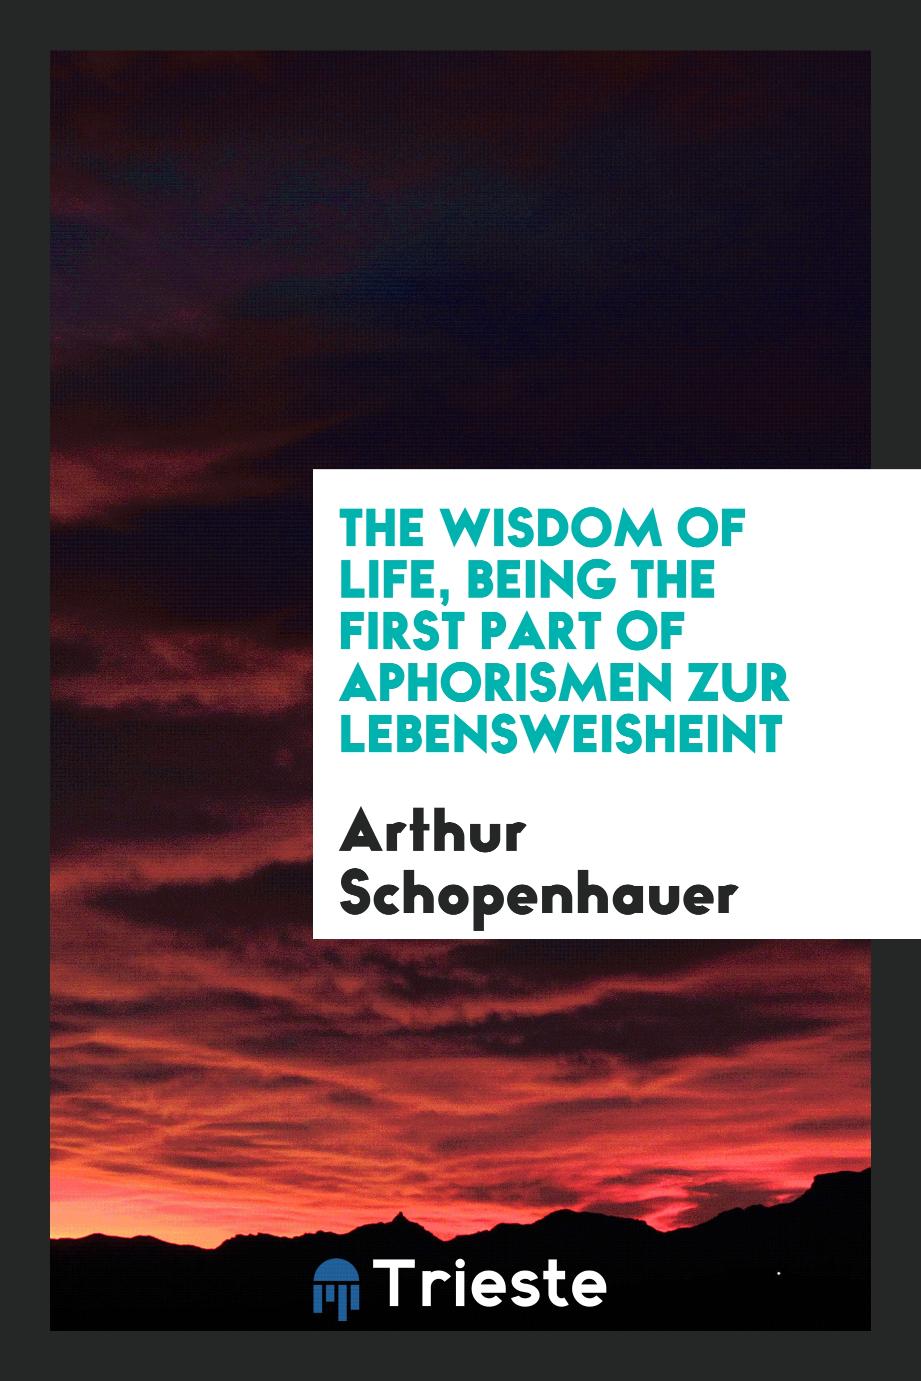 The Wisdom of Life, Being the First Part of Aphorismen zur Lebensweisheint